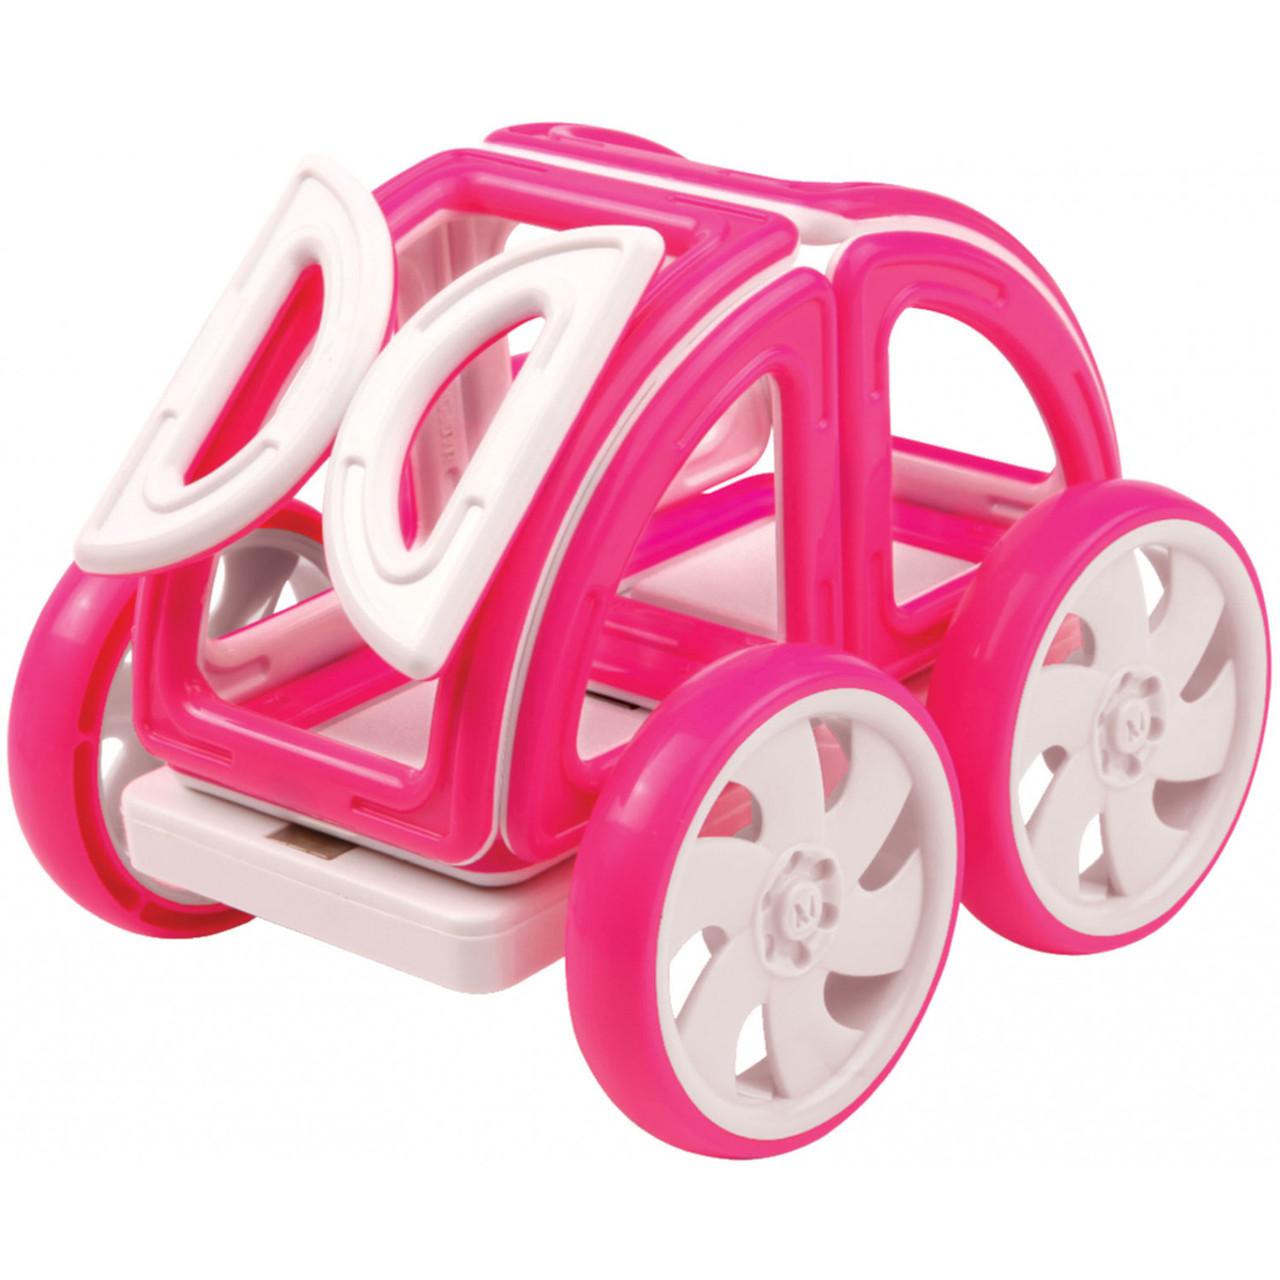 702008/63147 Magformers My First Buggy Car Set - Pink 20 (Багги авто - розовый)